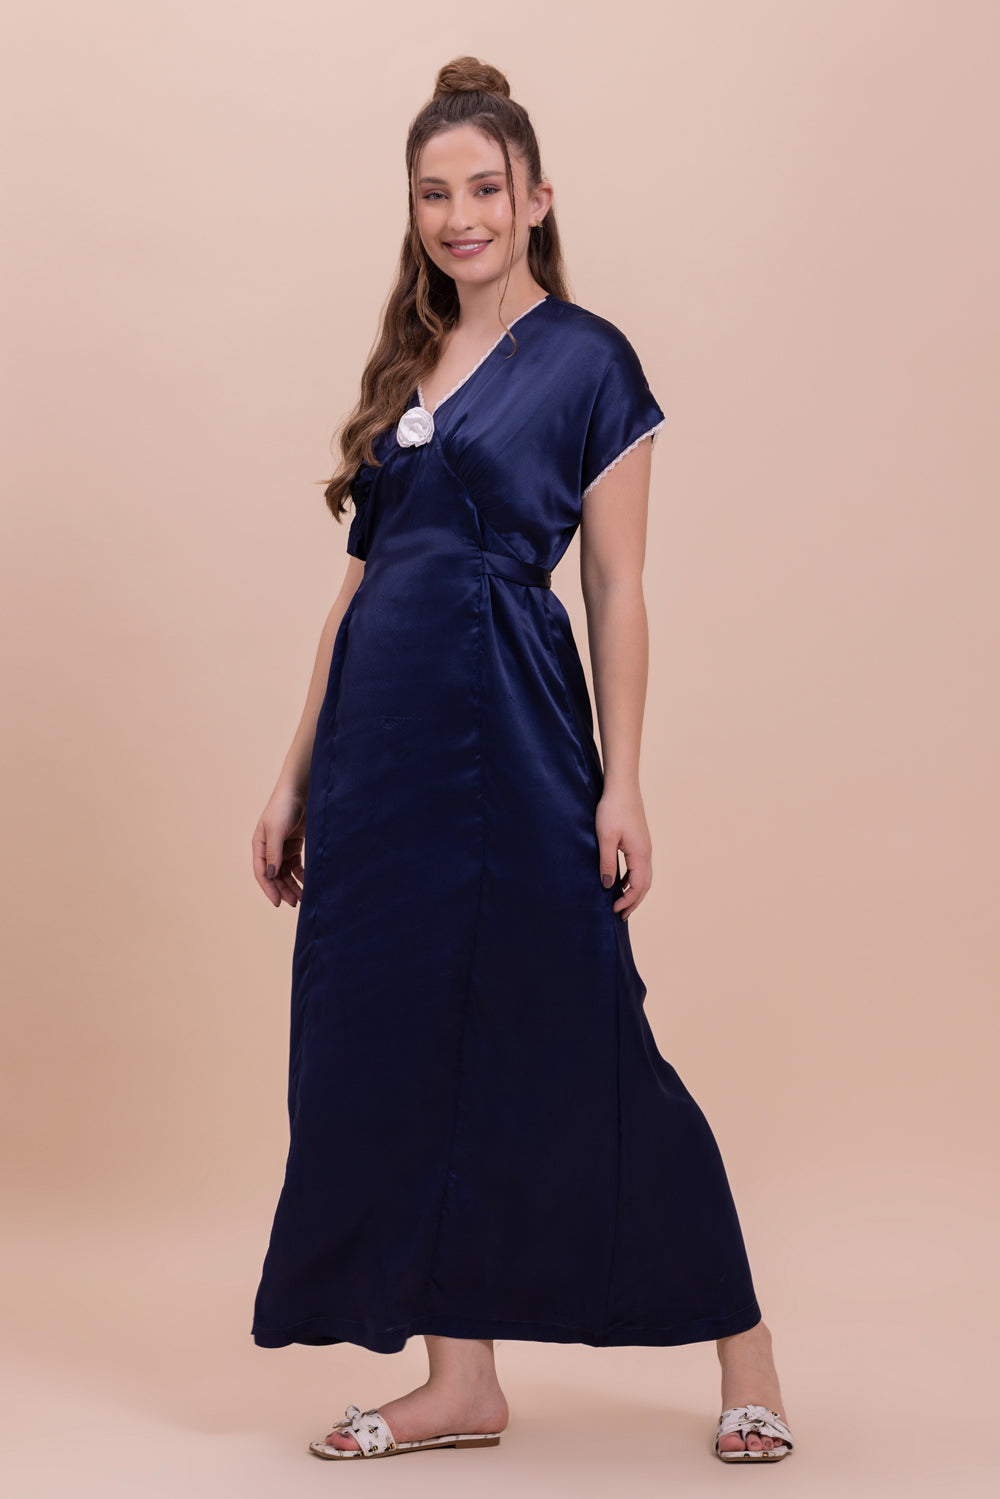 Elegant Blue Satin Night dress